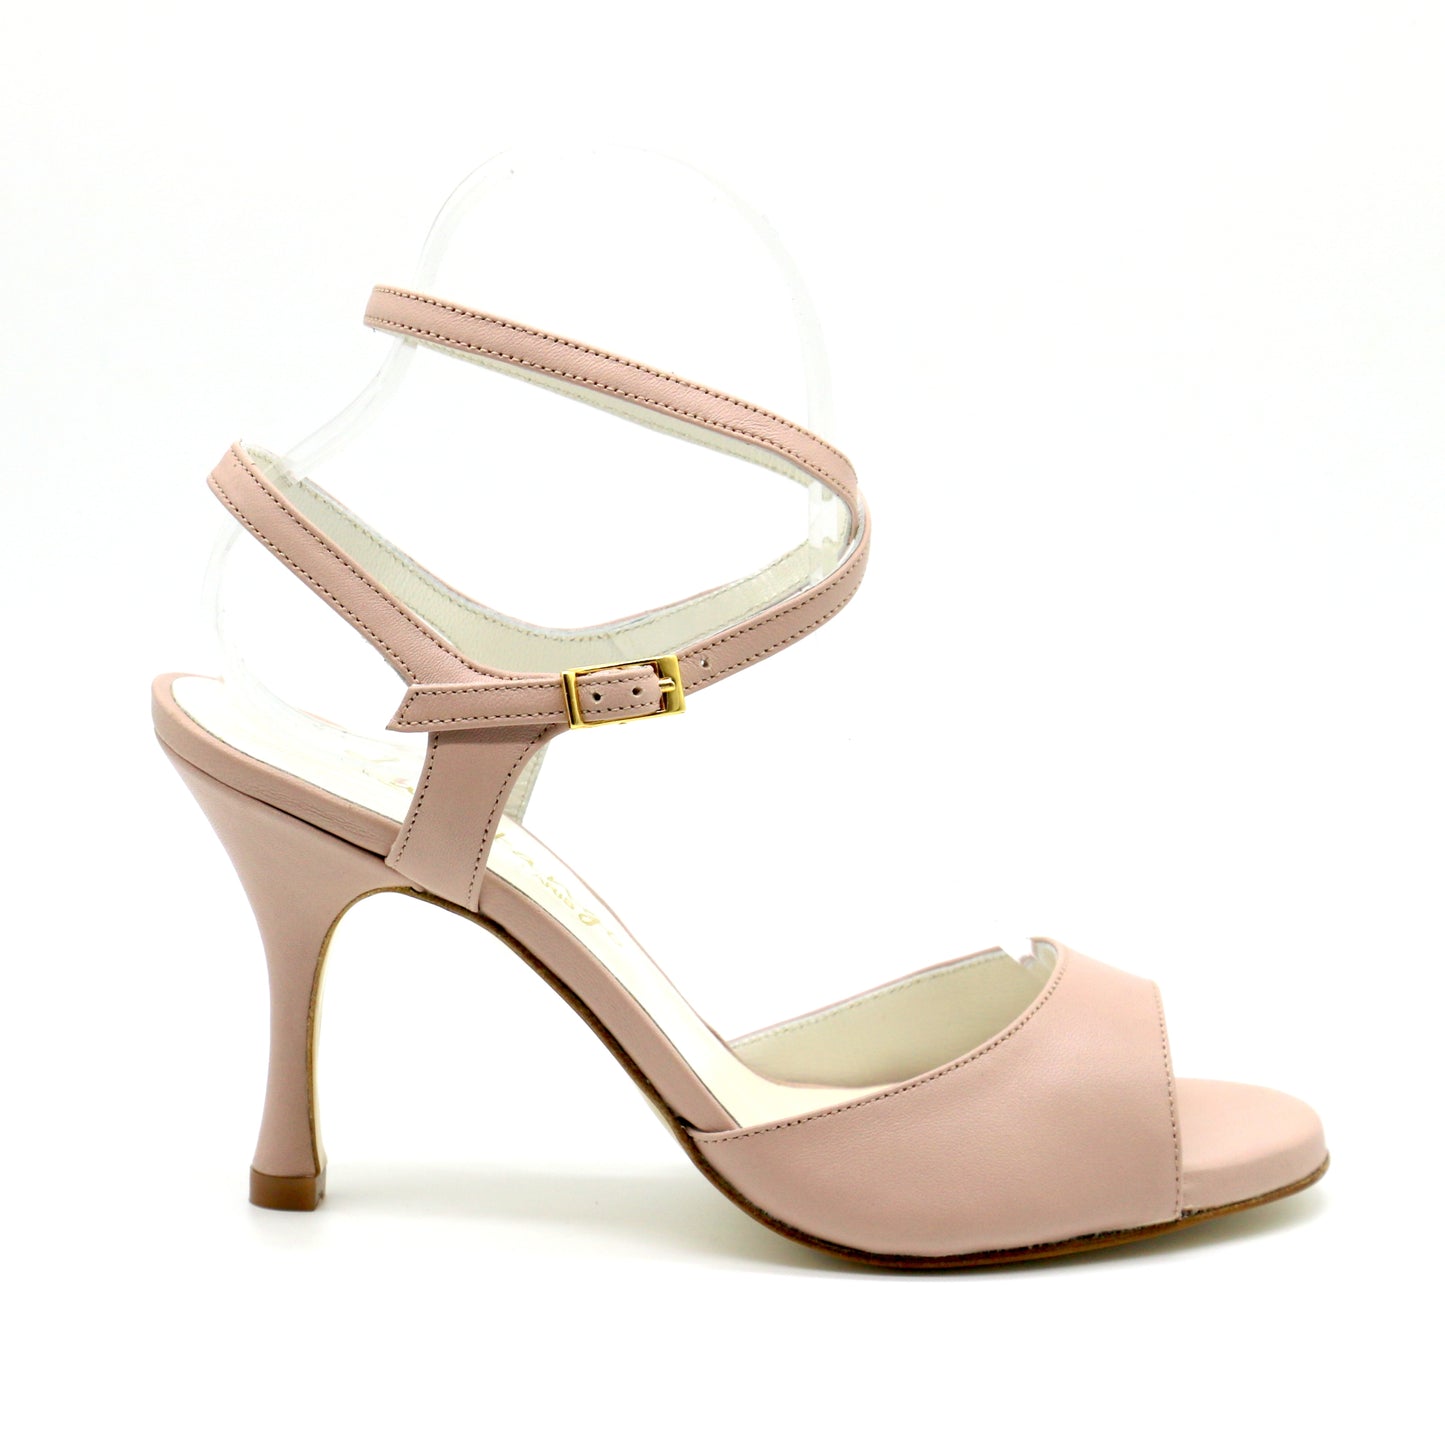 Sentimental Smooth leather Nude rosé heels 8cm